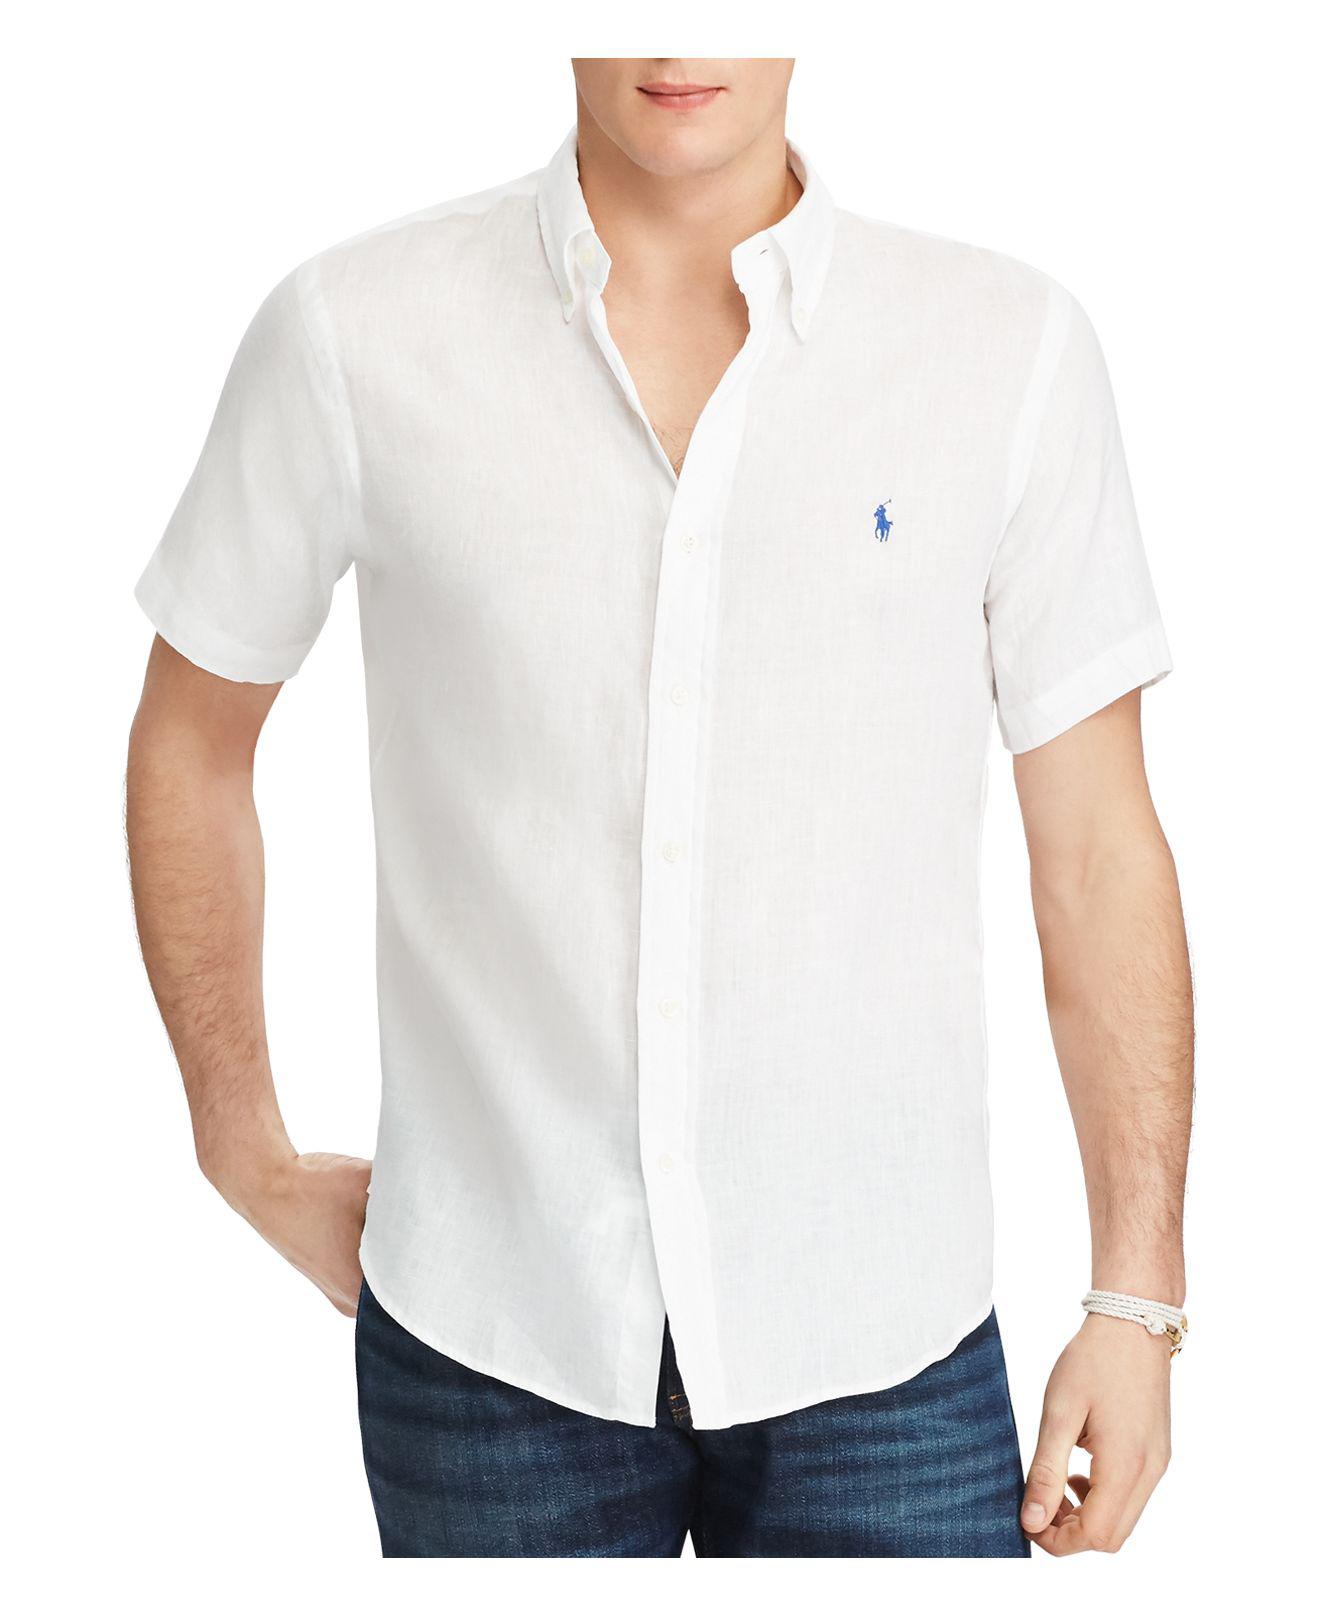 white polo button down shirt